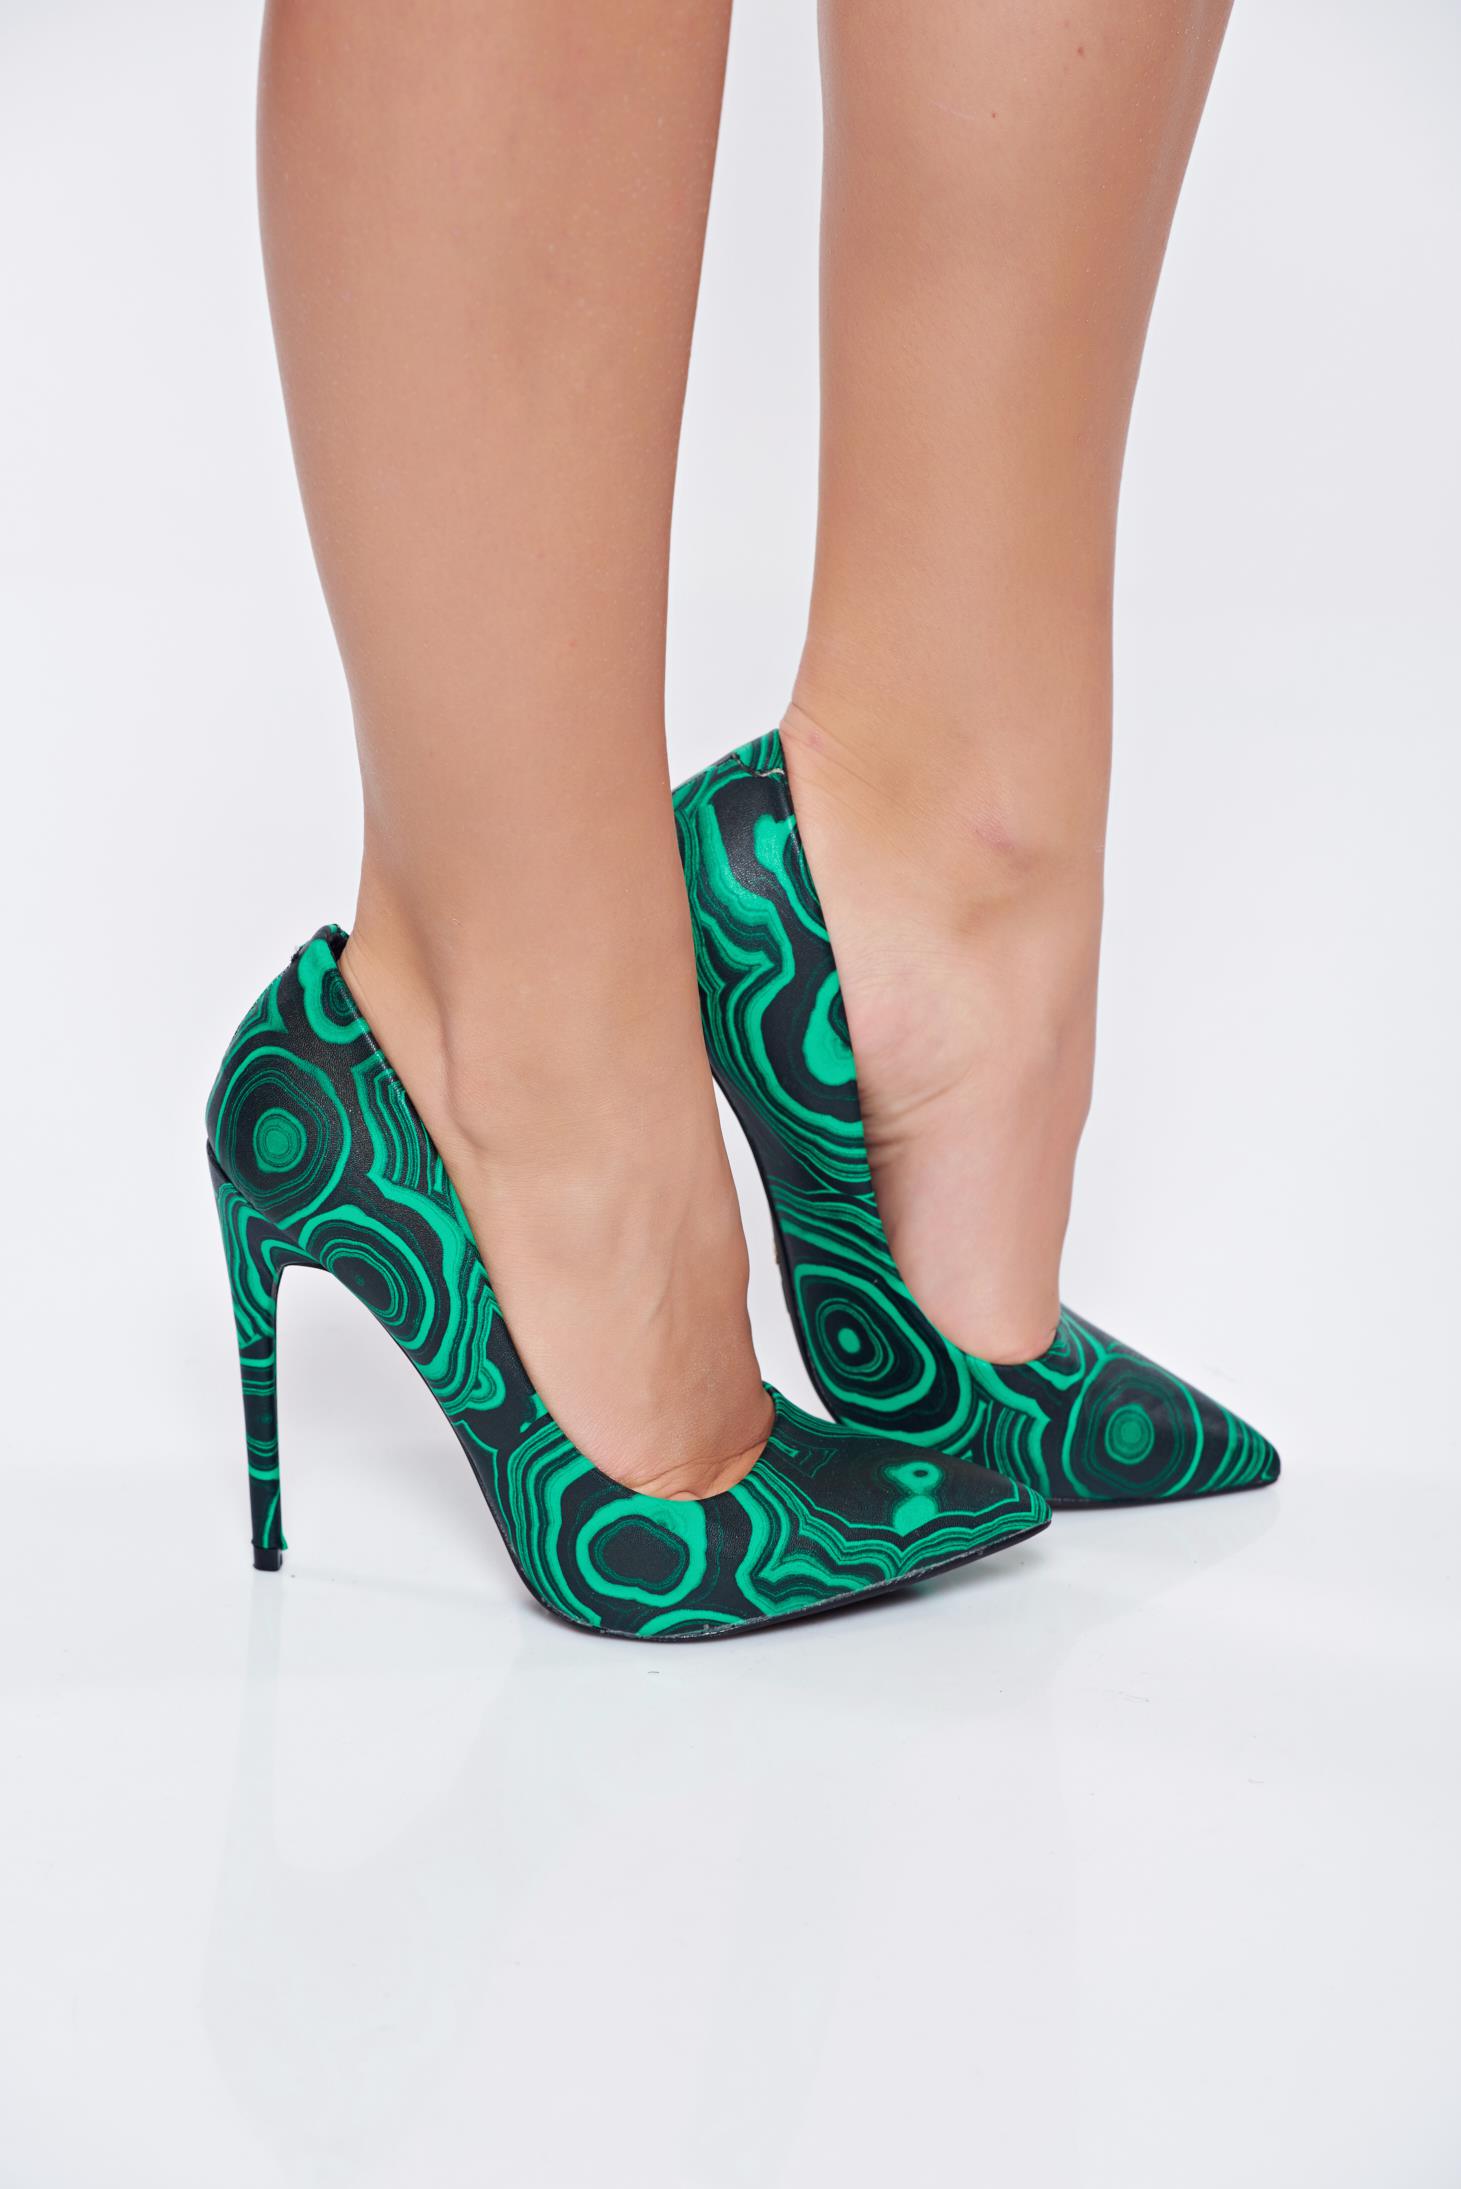 classy stiletto heels